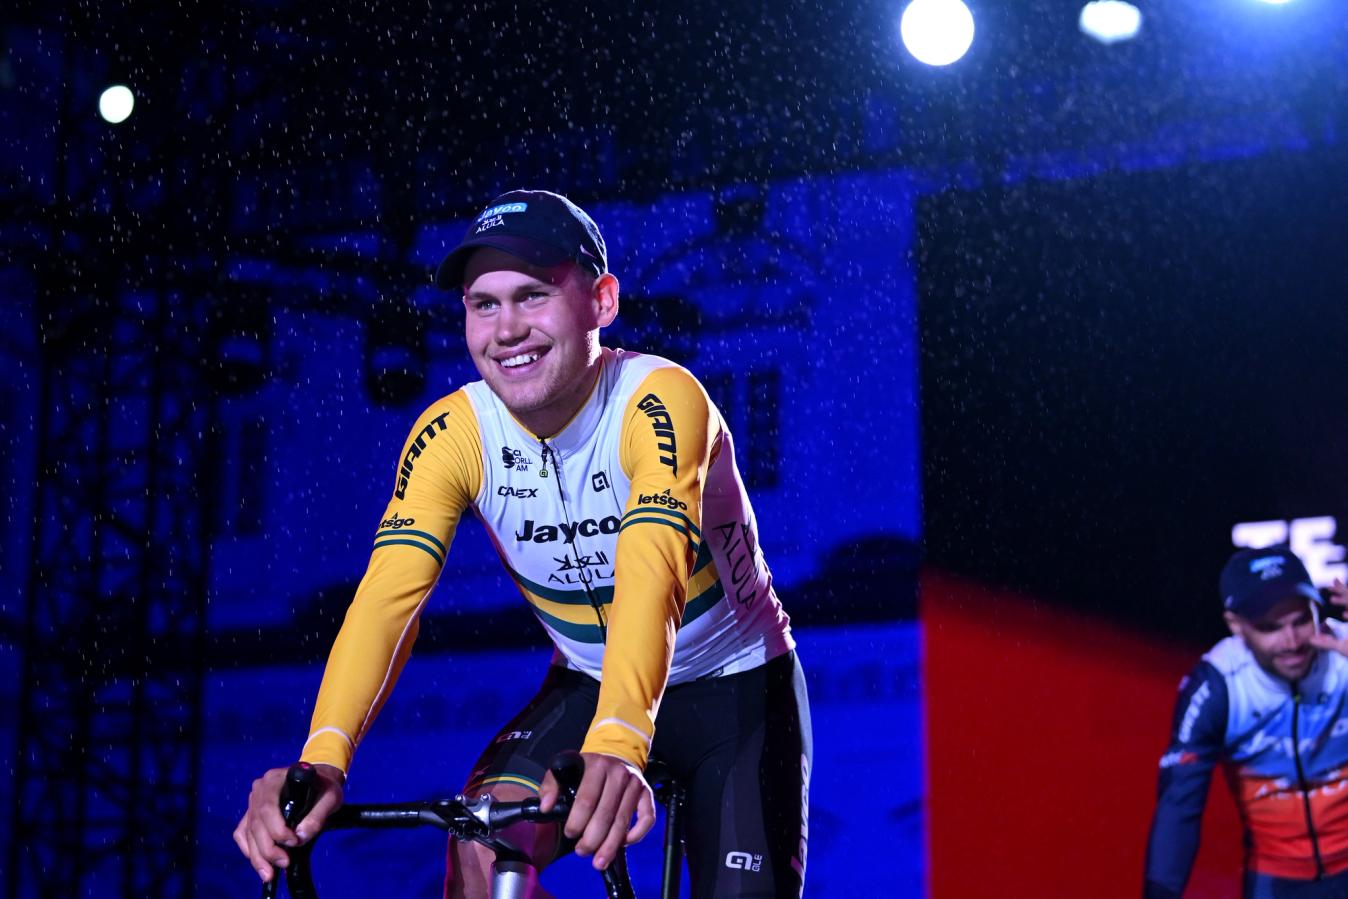 Luke Plapp has been building towards the Giro to test his abilities across three weeks